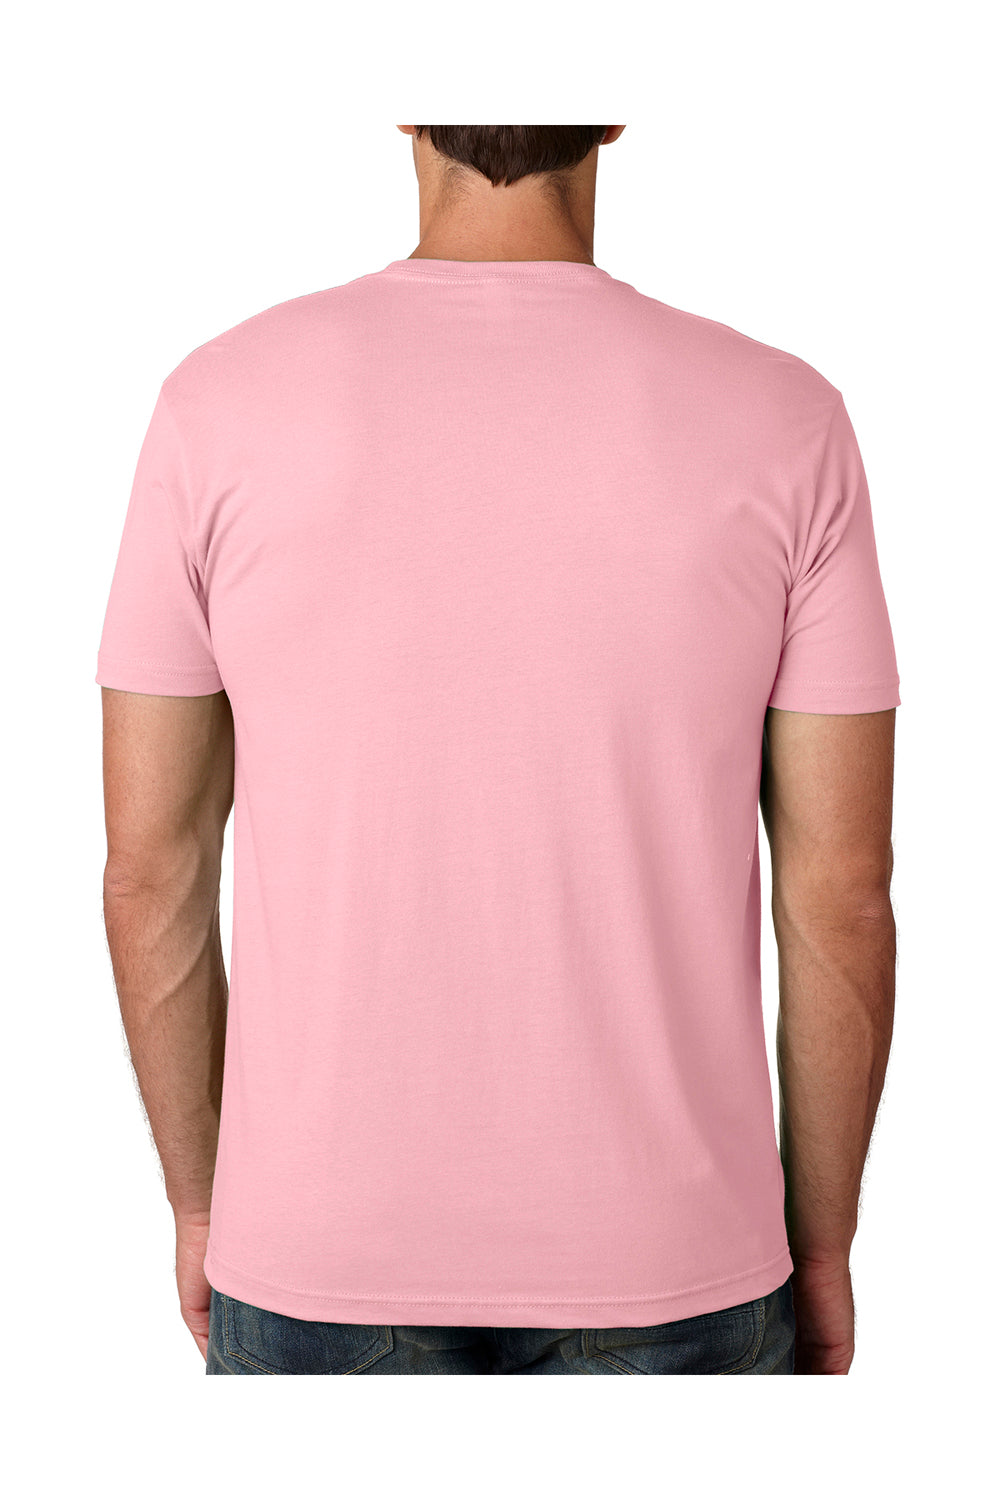 Next Level 3600 Mens Fine Jersey Short Sleeve Crewneck T-Shirt Light Pink Back